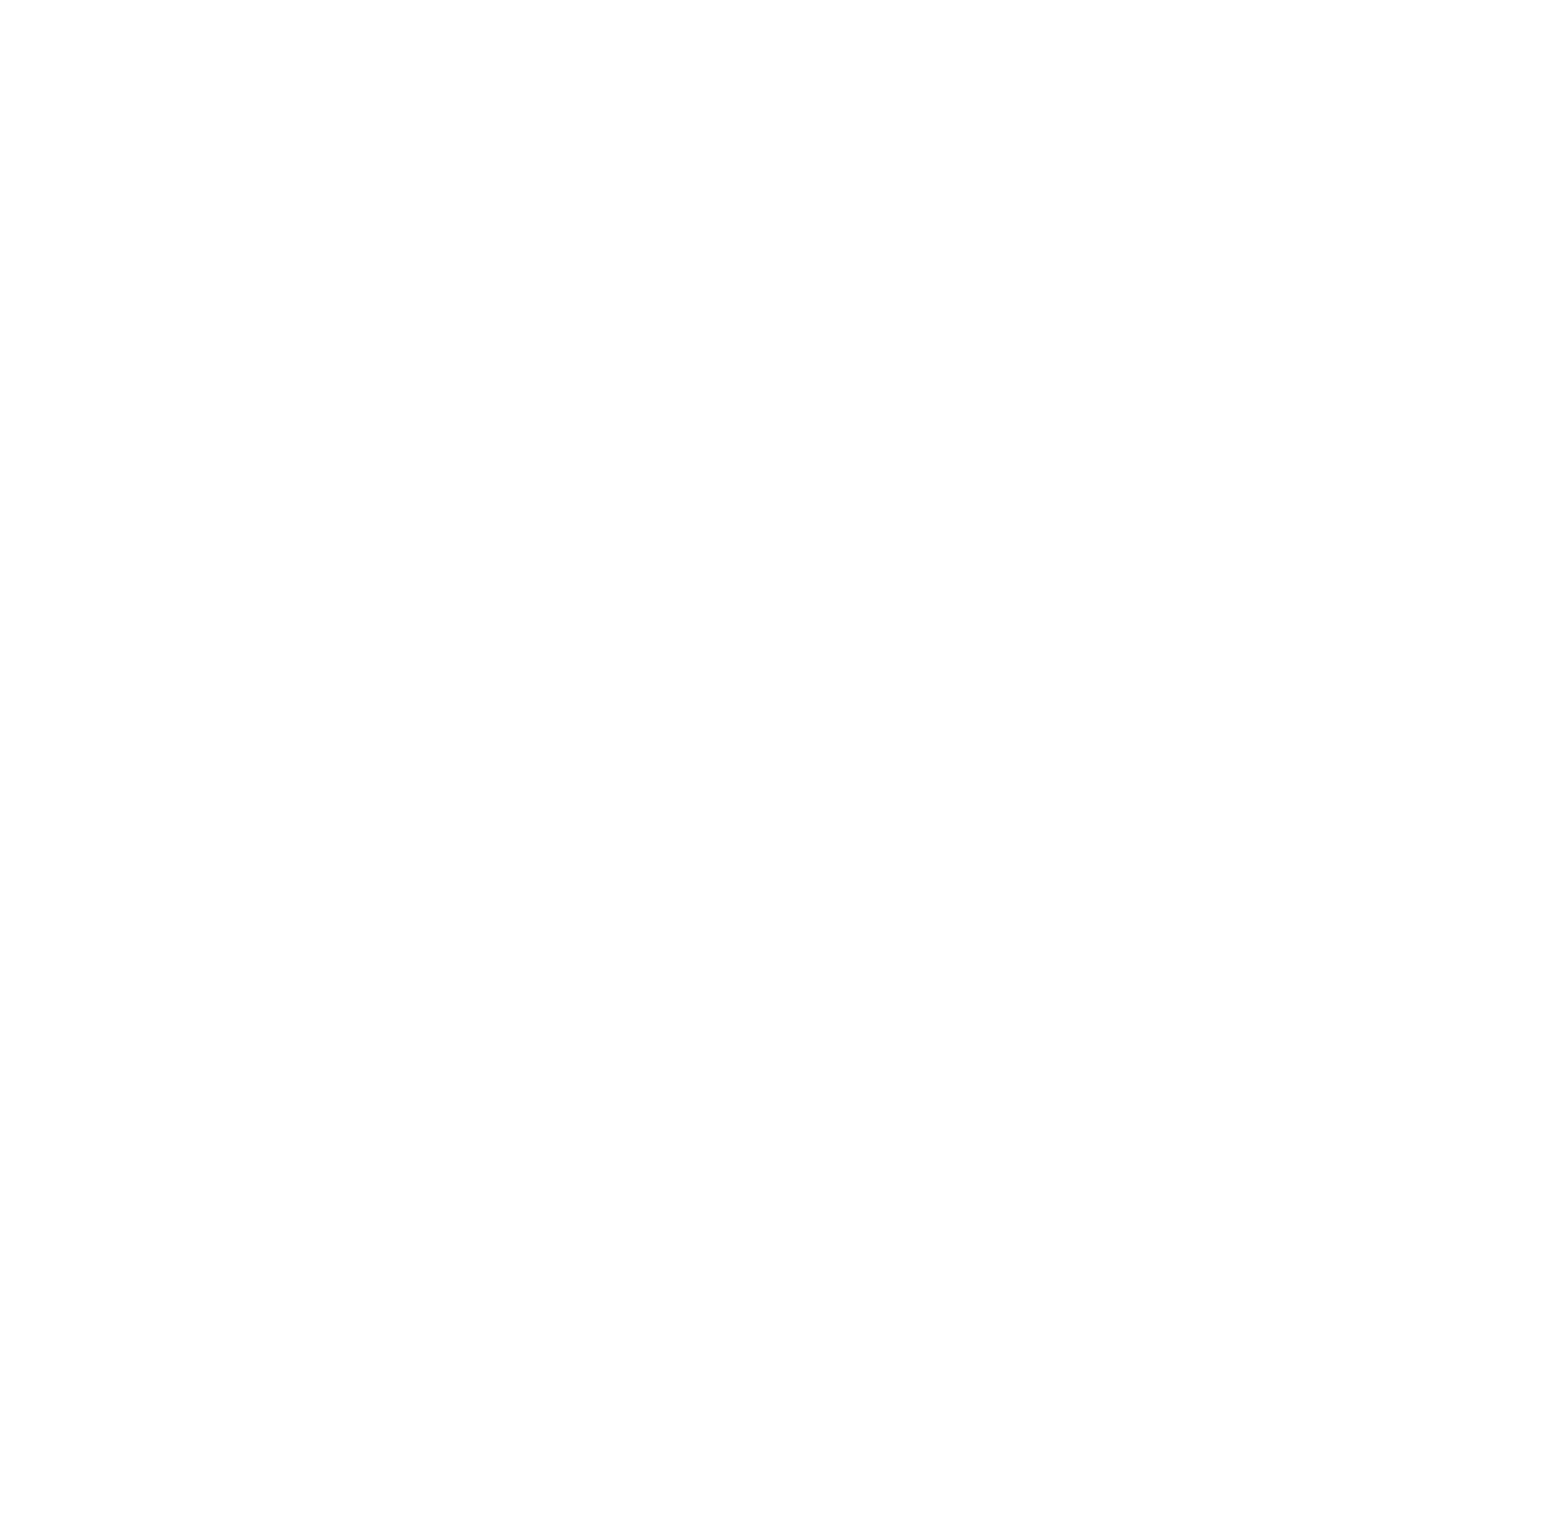 China Mobile logo pour fonds sombres (PNG transparent)